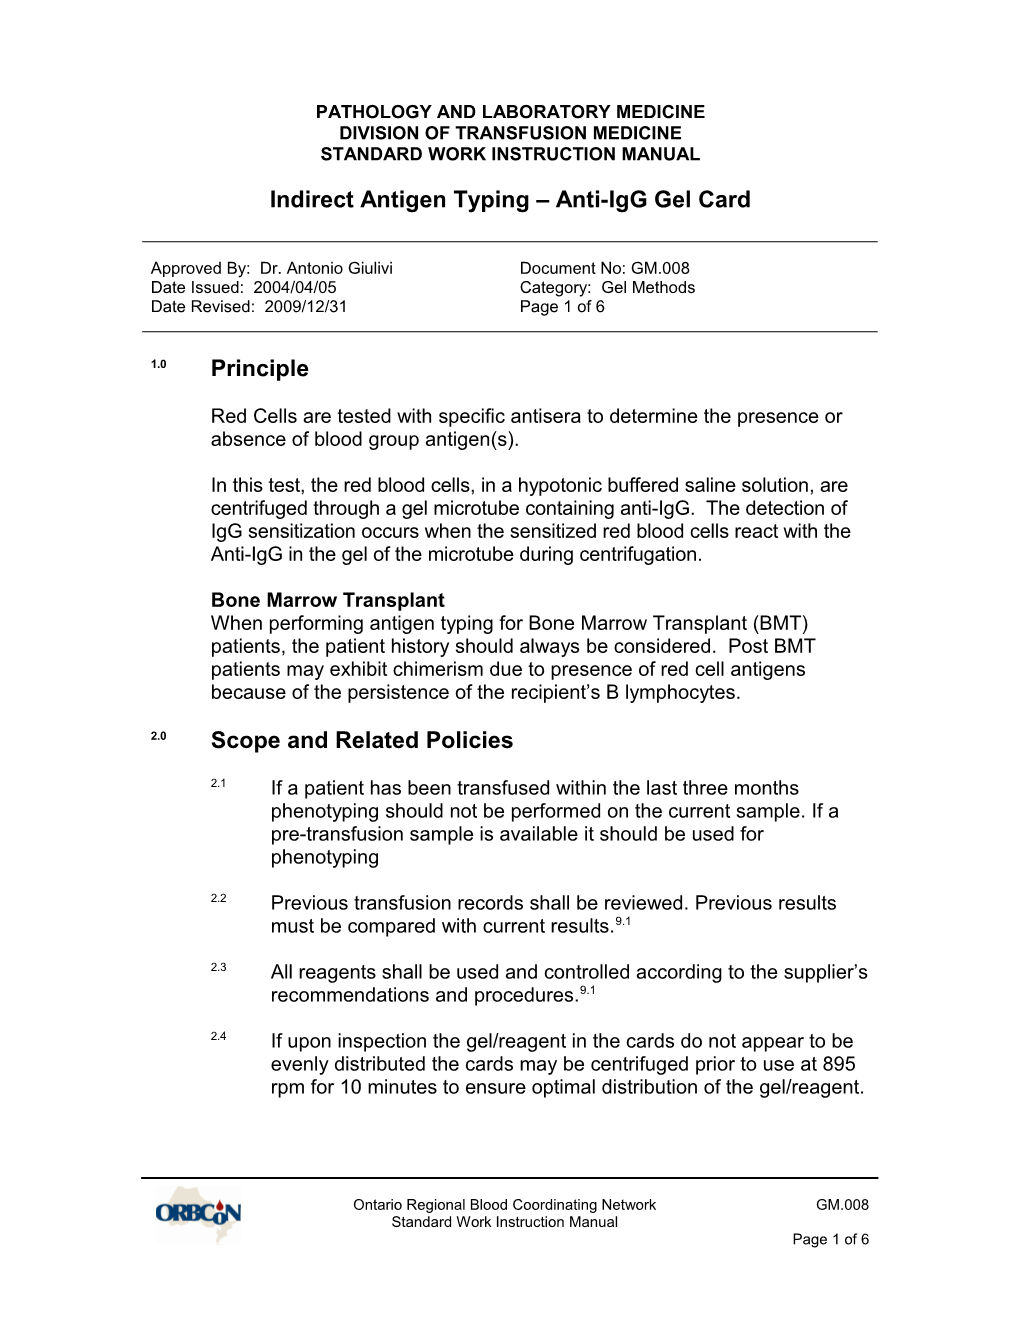 GM.010 Indirect Antigen Typing - Anti-Igg Gel Card